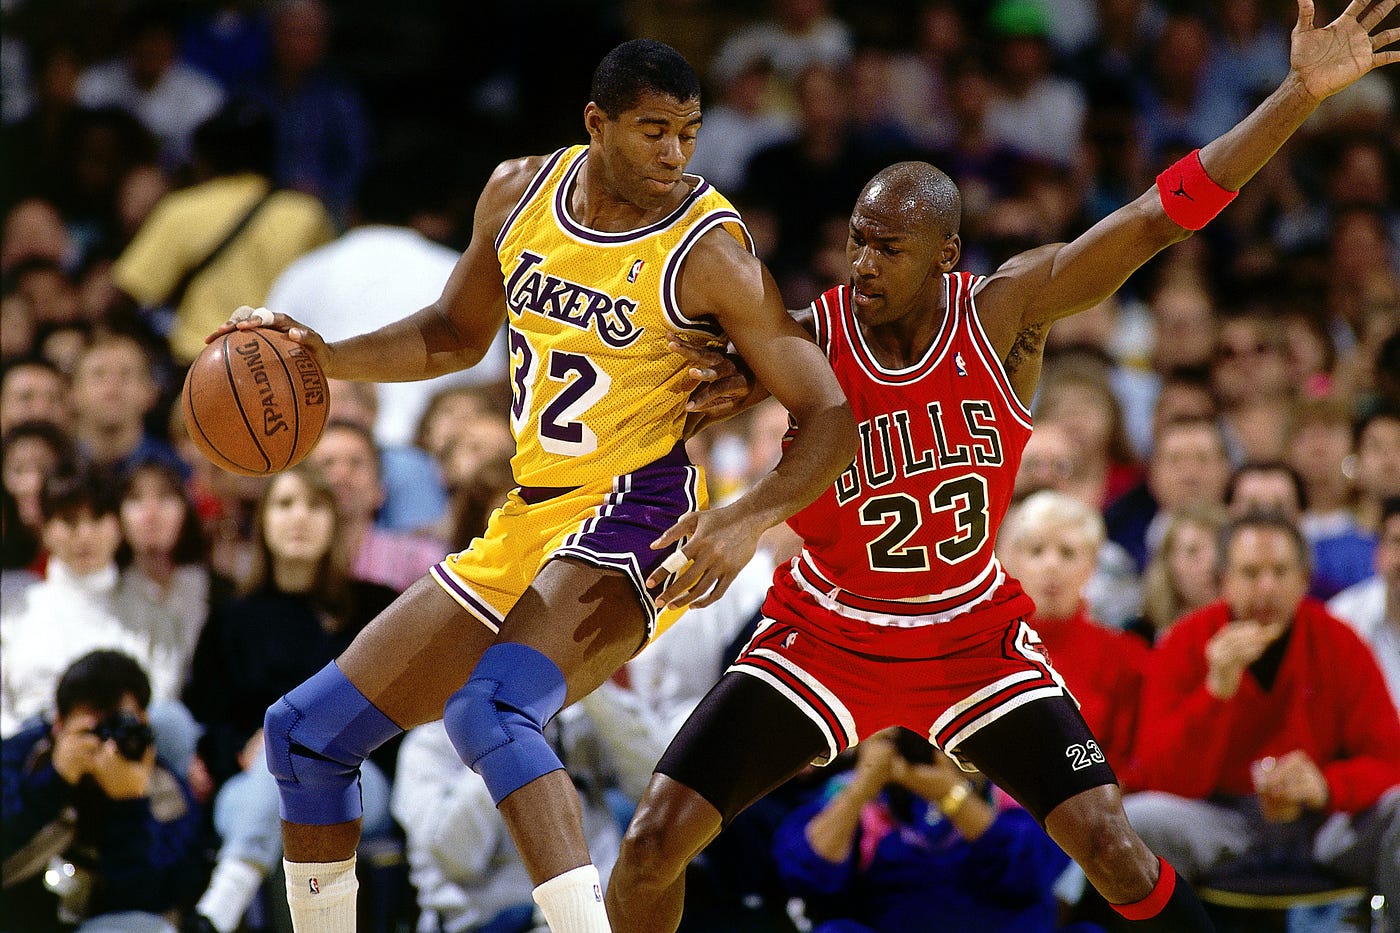 Michael Jordan Chicago Bulls 1989-1990 Authentic Jersey - Rare